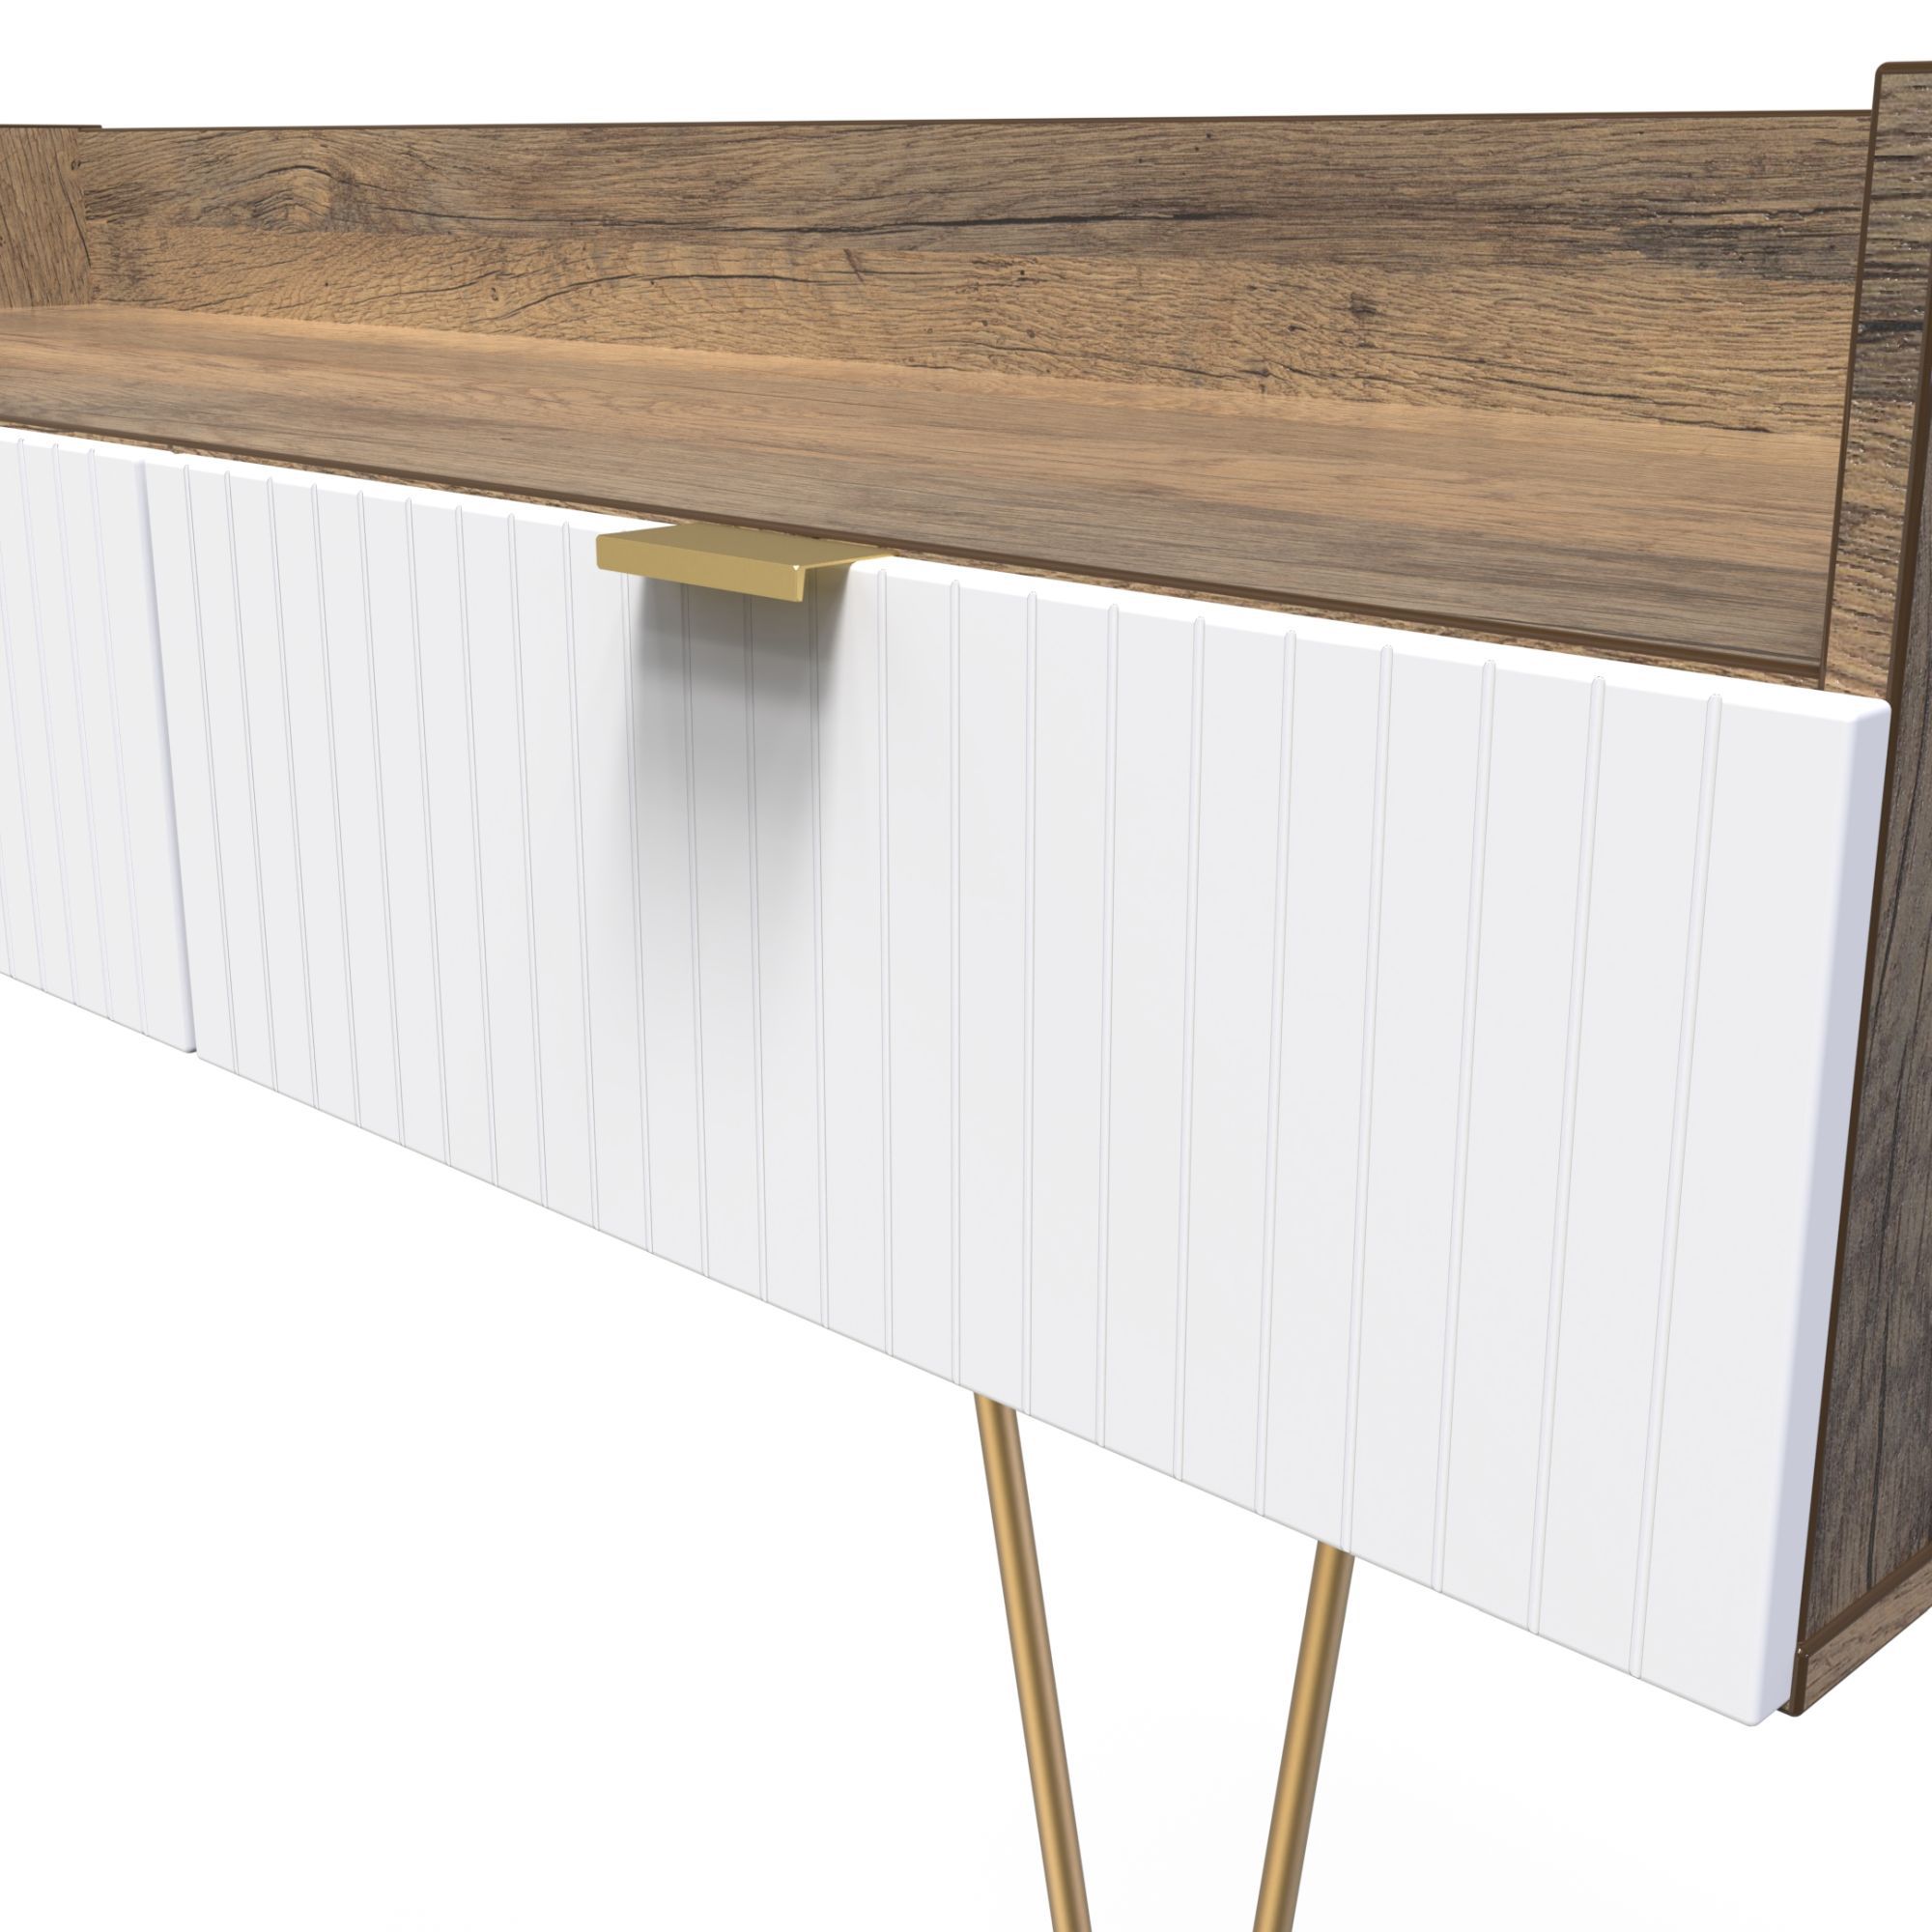 Linear Ready assembled White oak effect Media unit with 2 drawers, (H)128cm x (W)51.5cm x (D)39.5cm